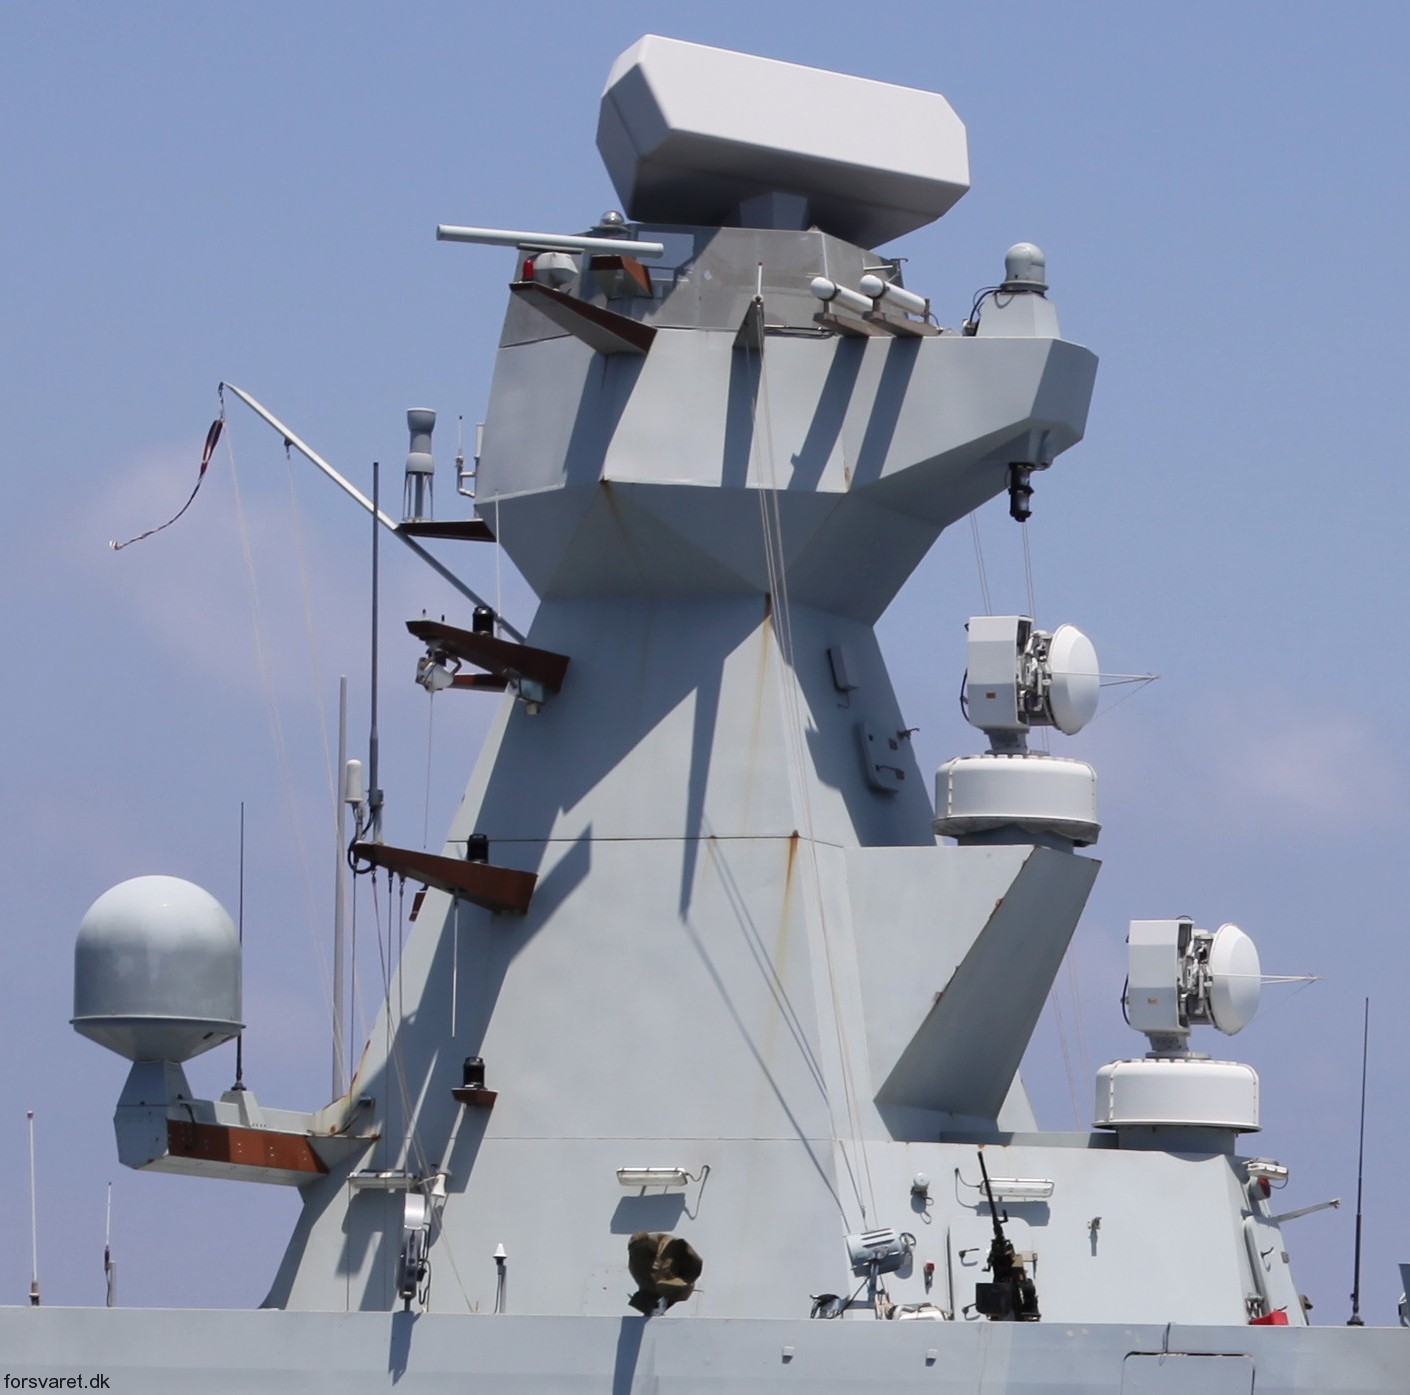 absalon class frigate command support ship royal danish navy 25x thales smart-s mk.2 radar saab ceros 200 fire control